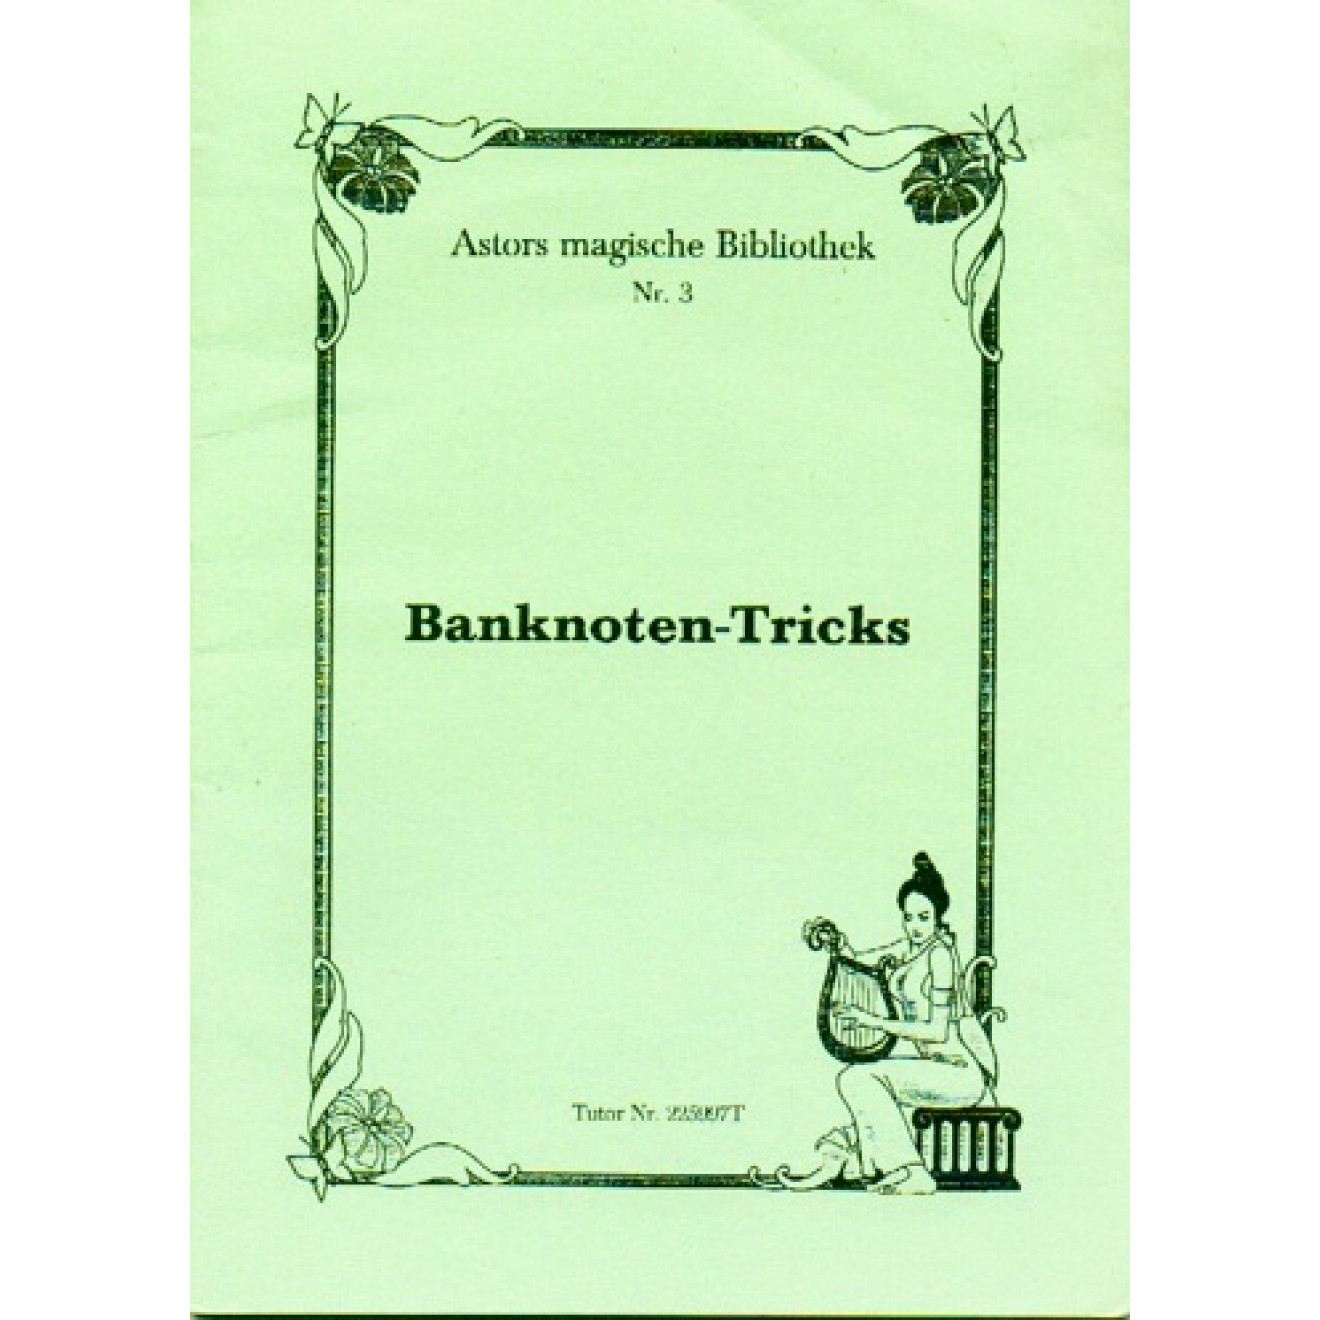 Banknoten-Tricks